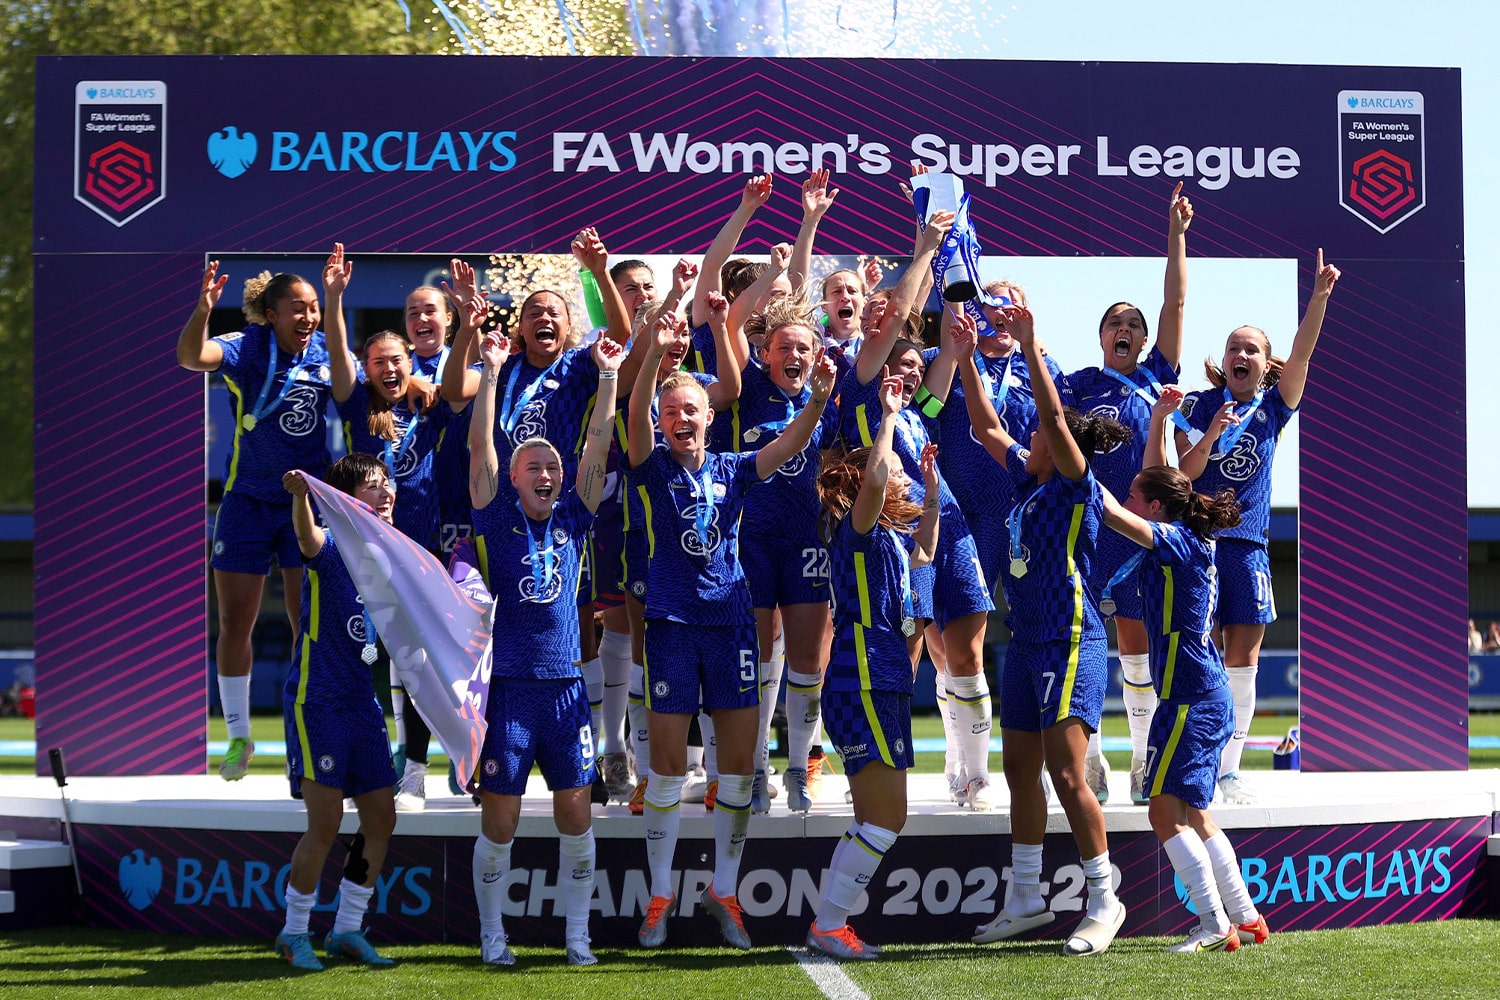 Chelsea team celebrates after winning FA's Women's Super League